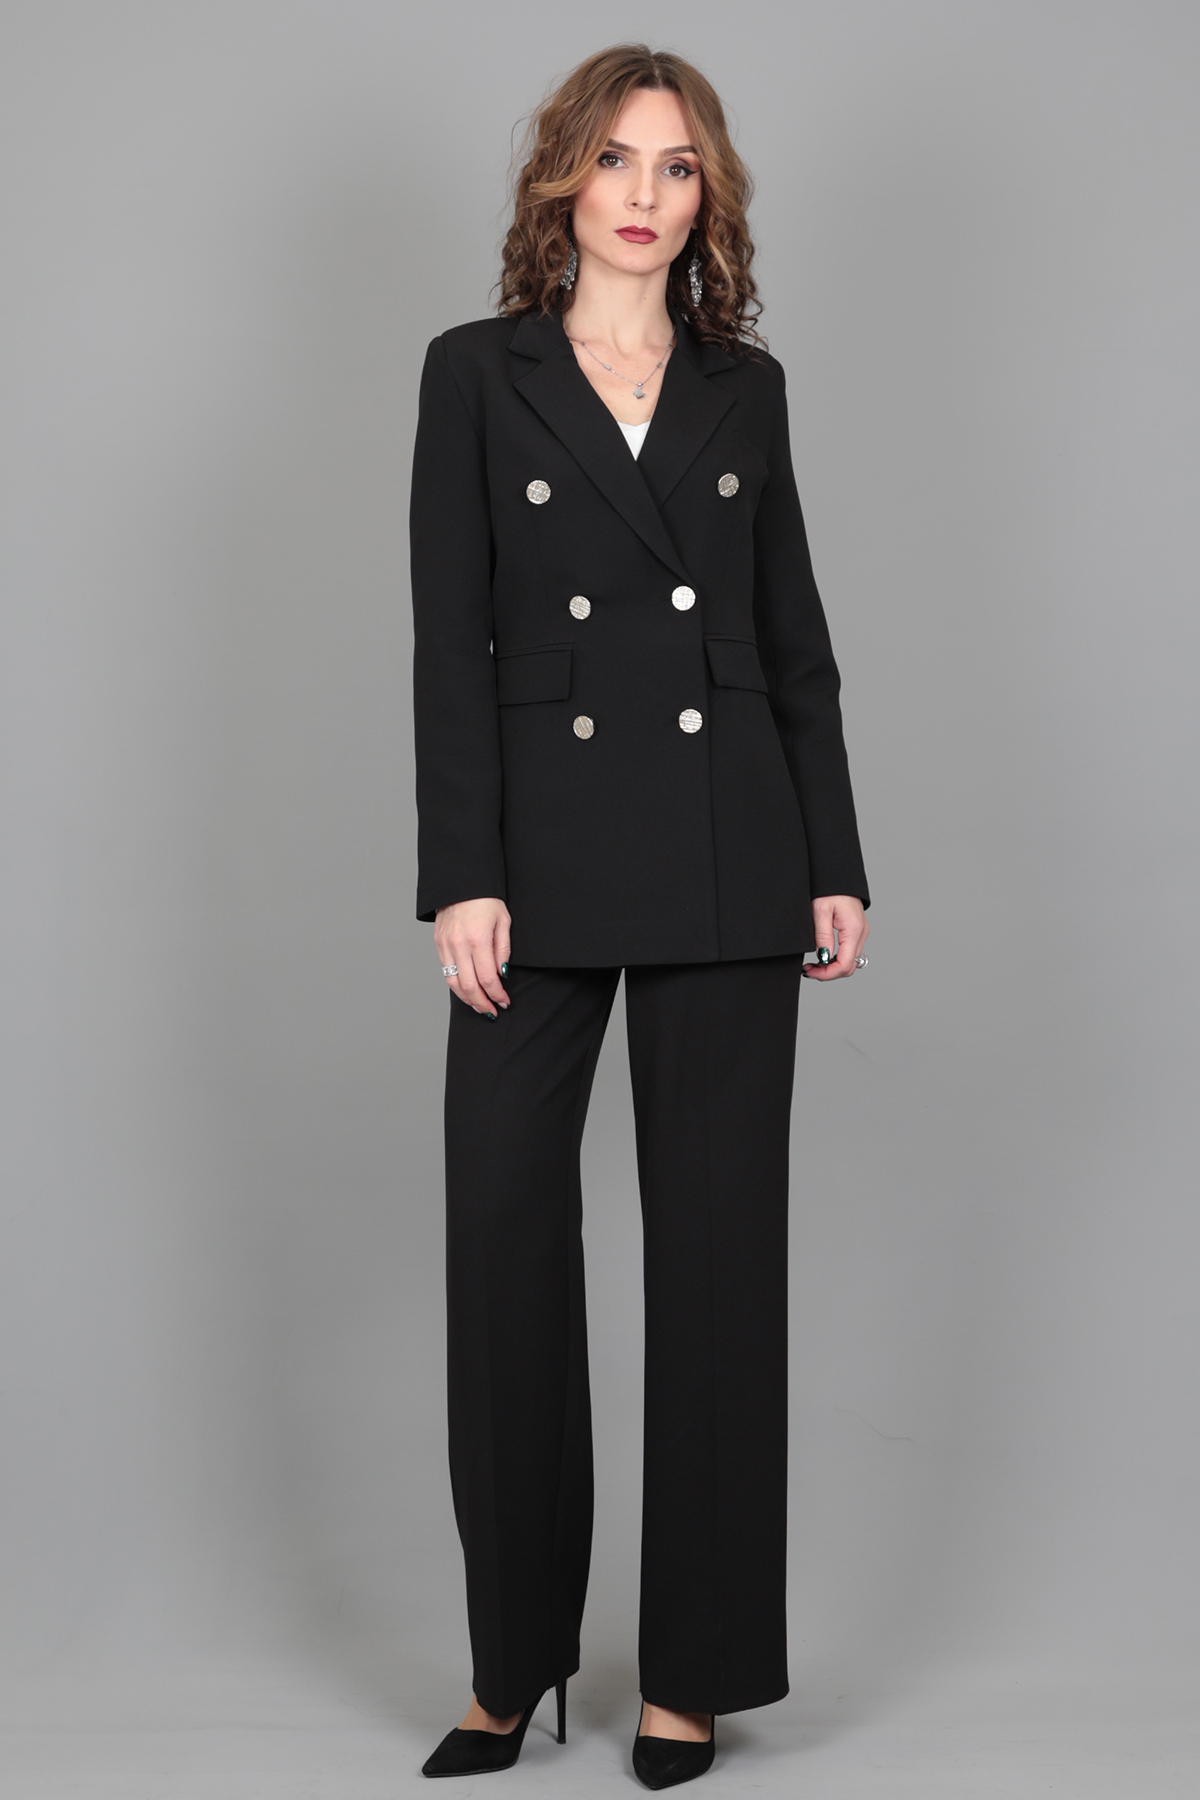 Blazer Ceket & Bol Paça Pantolon Takım-Siyah - Önder Özsoy | Ofis Giyim |  Yeni Sezon